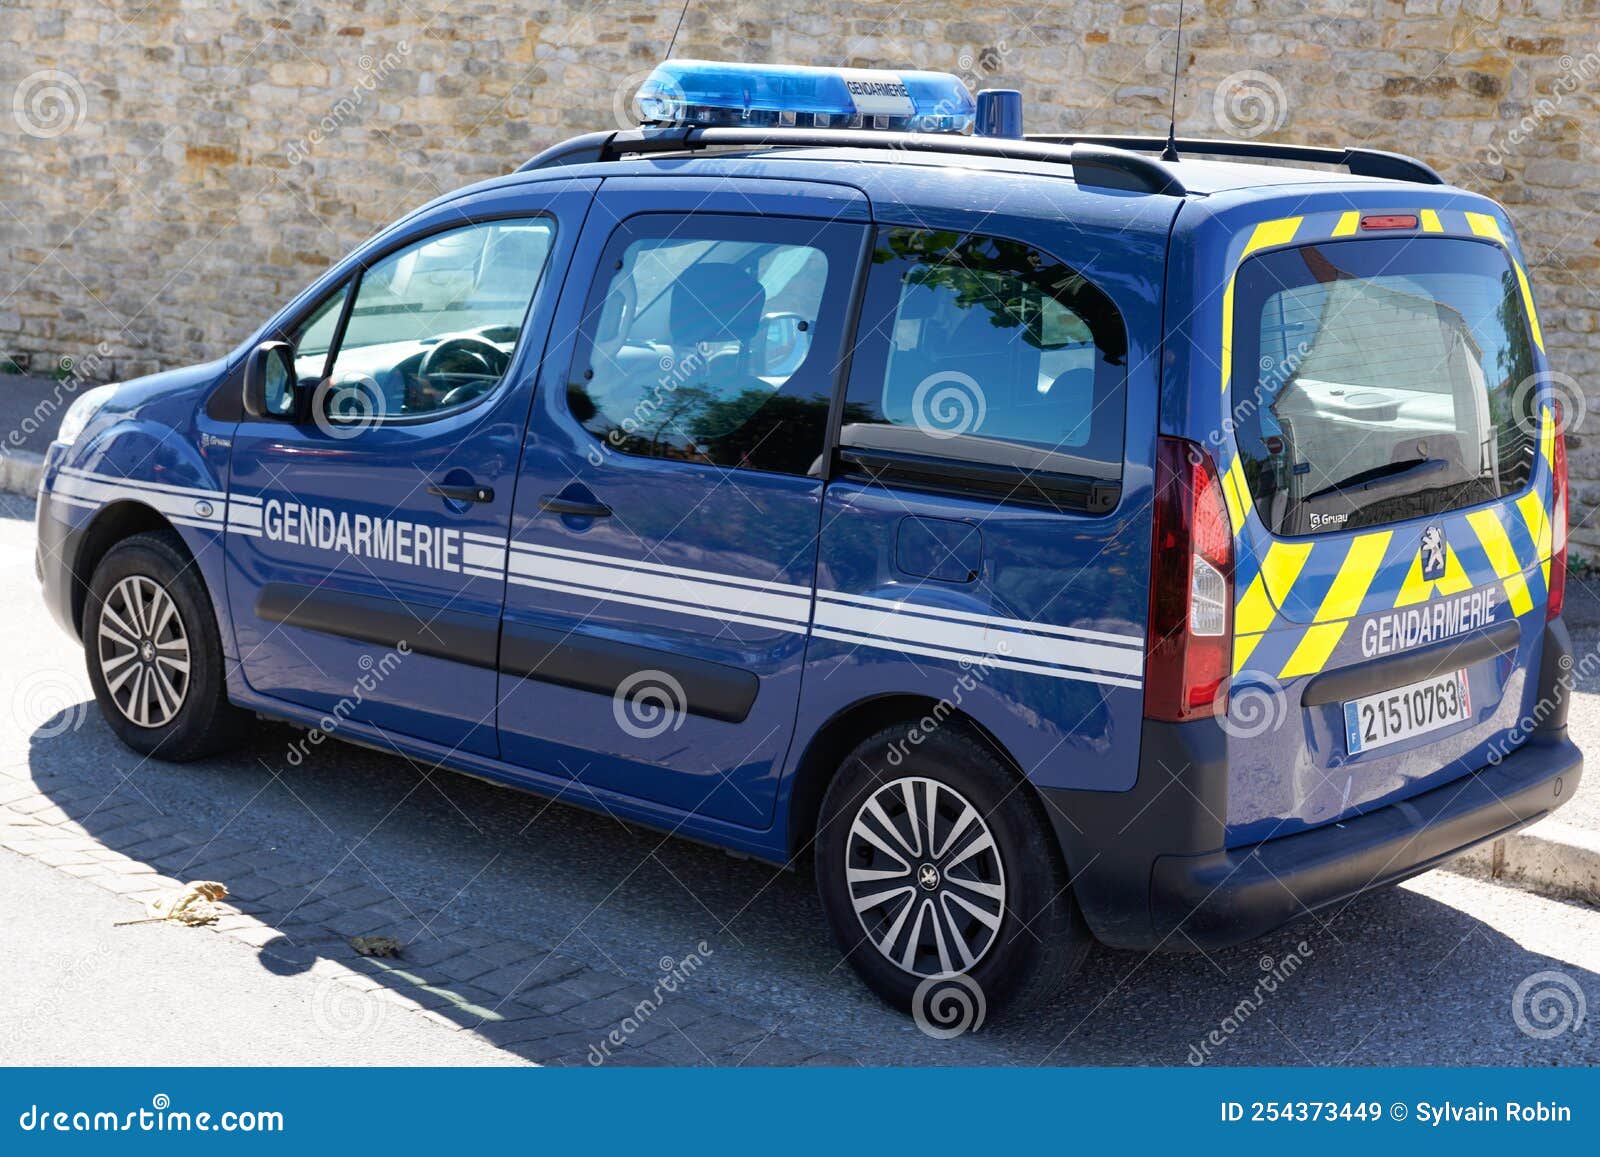 Véhicules sécurité : police, gendarmerie, douanes - Groupe Gruau